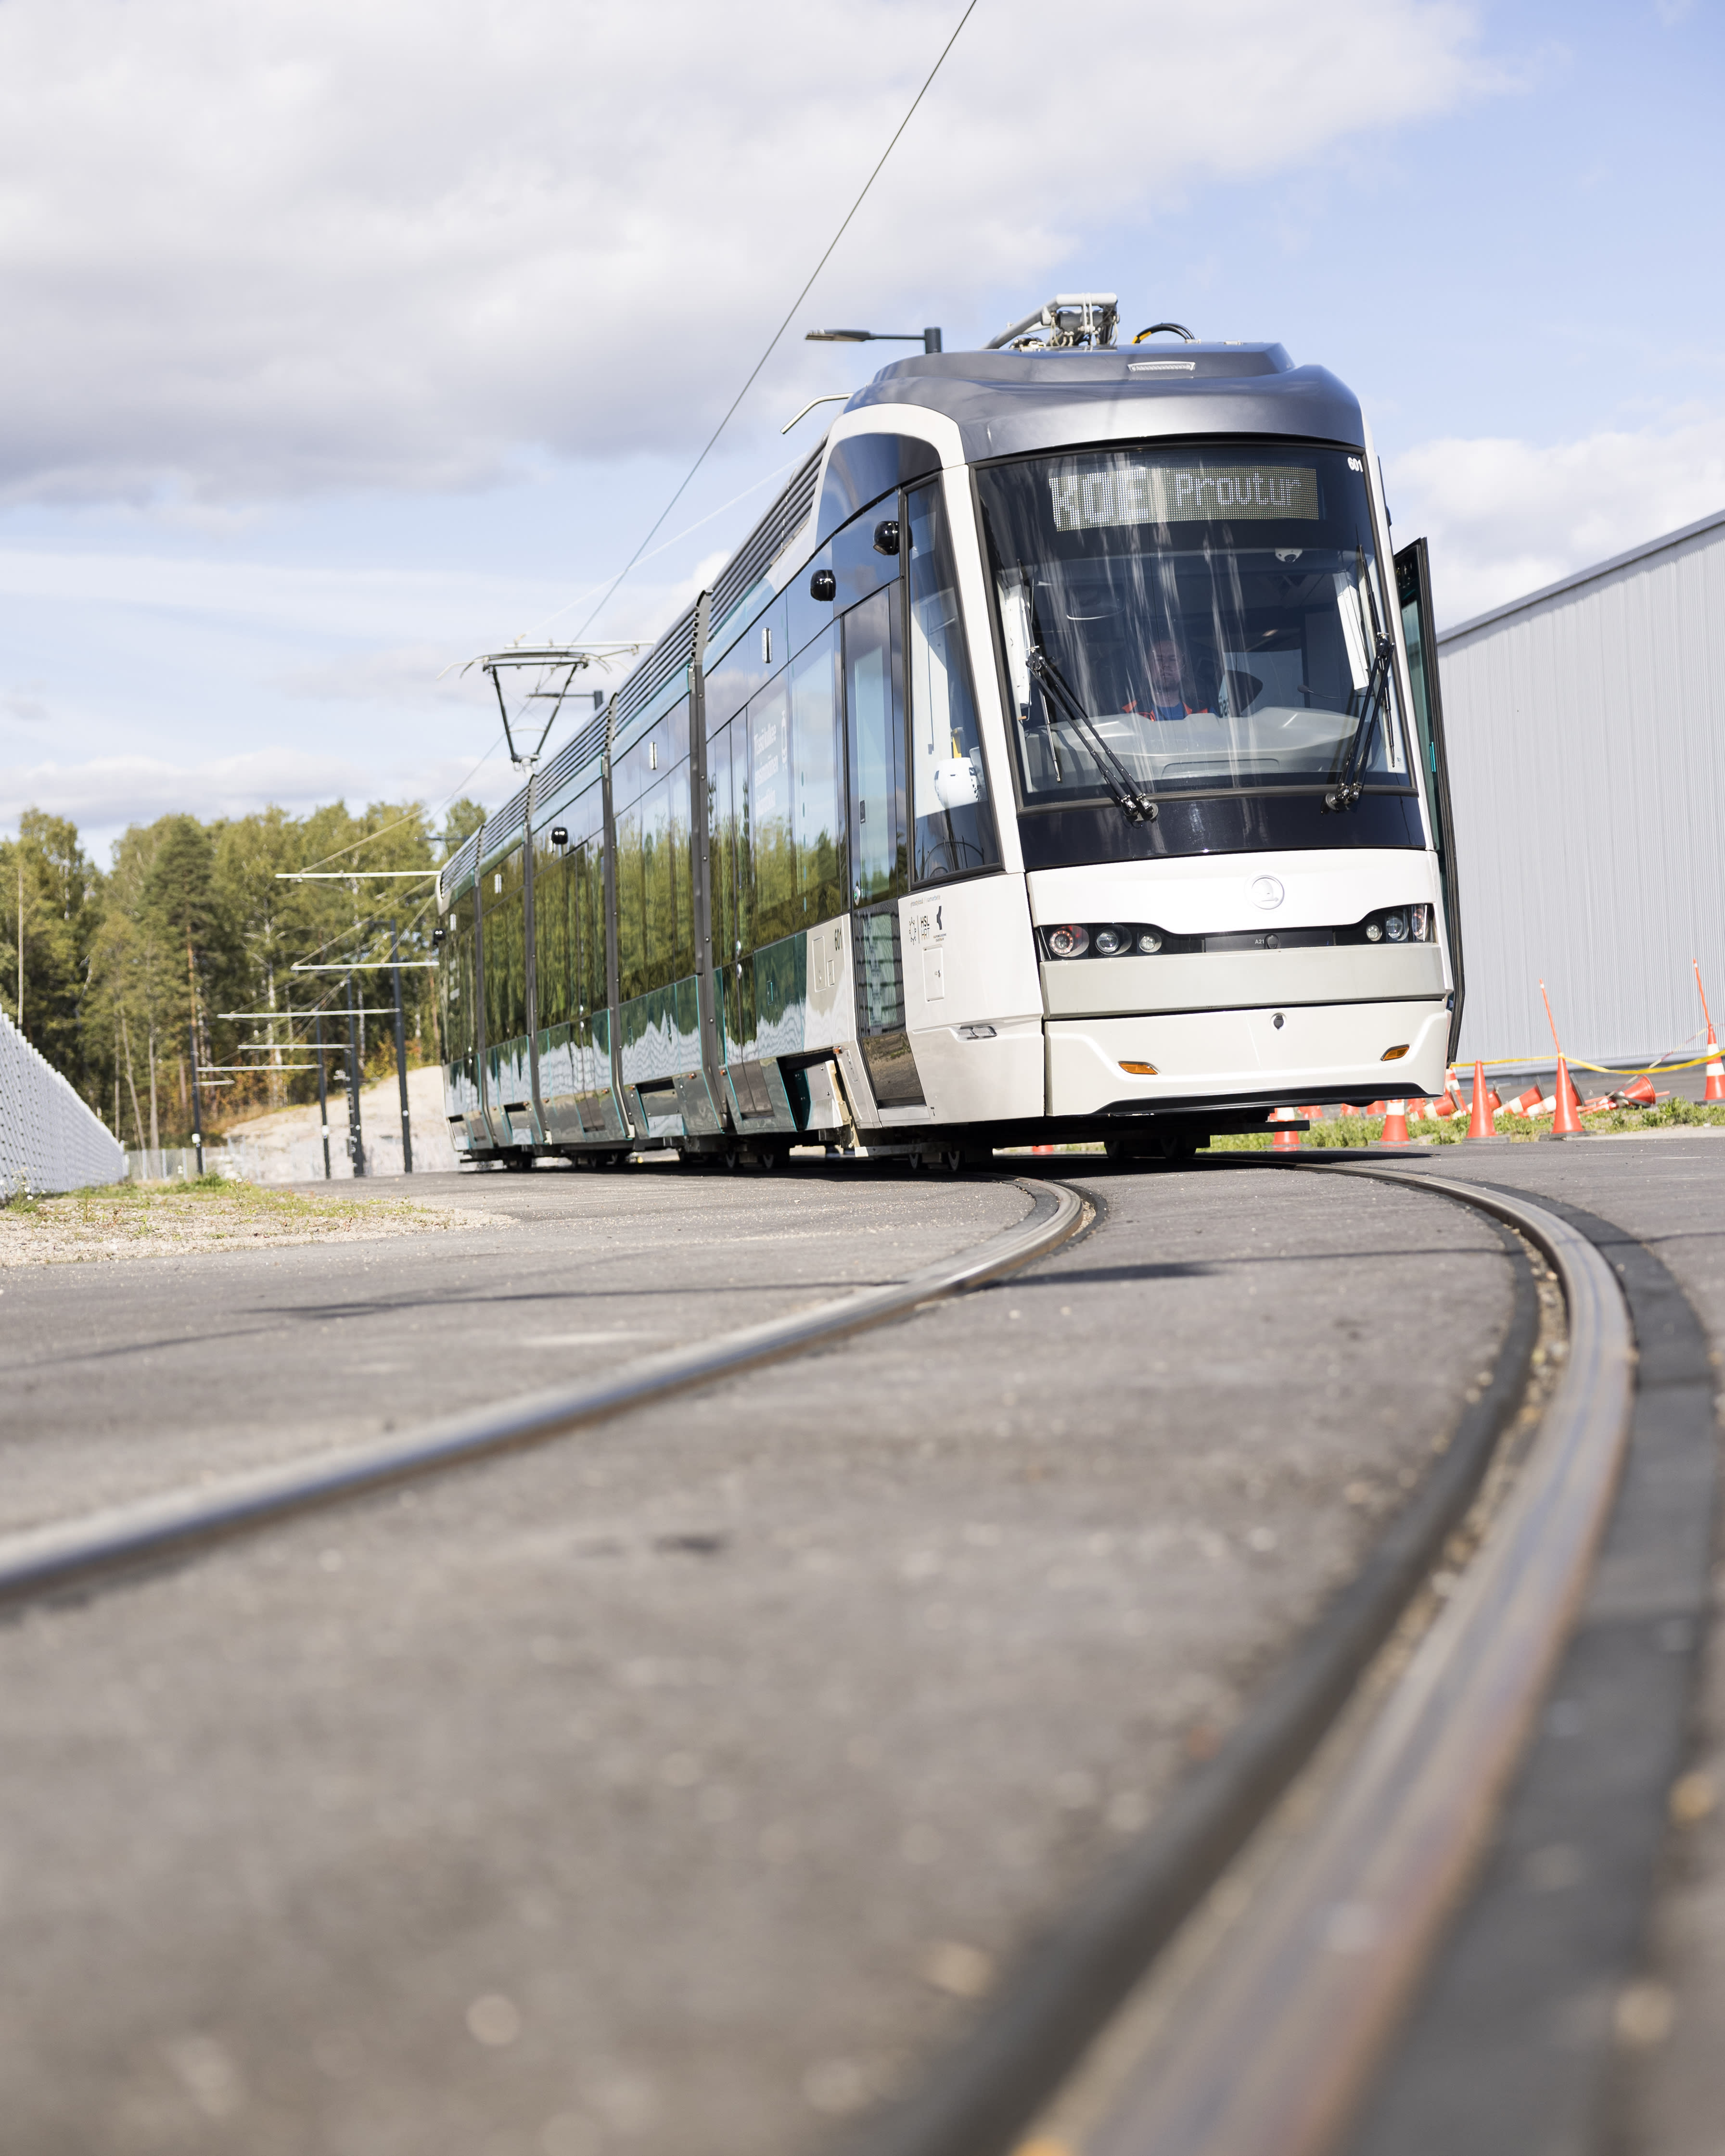 HSL’s tram line announcement derailed after a test run accident